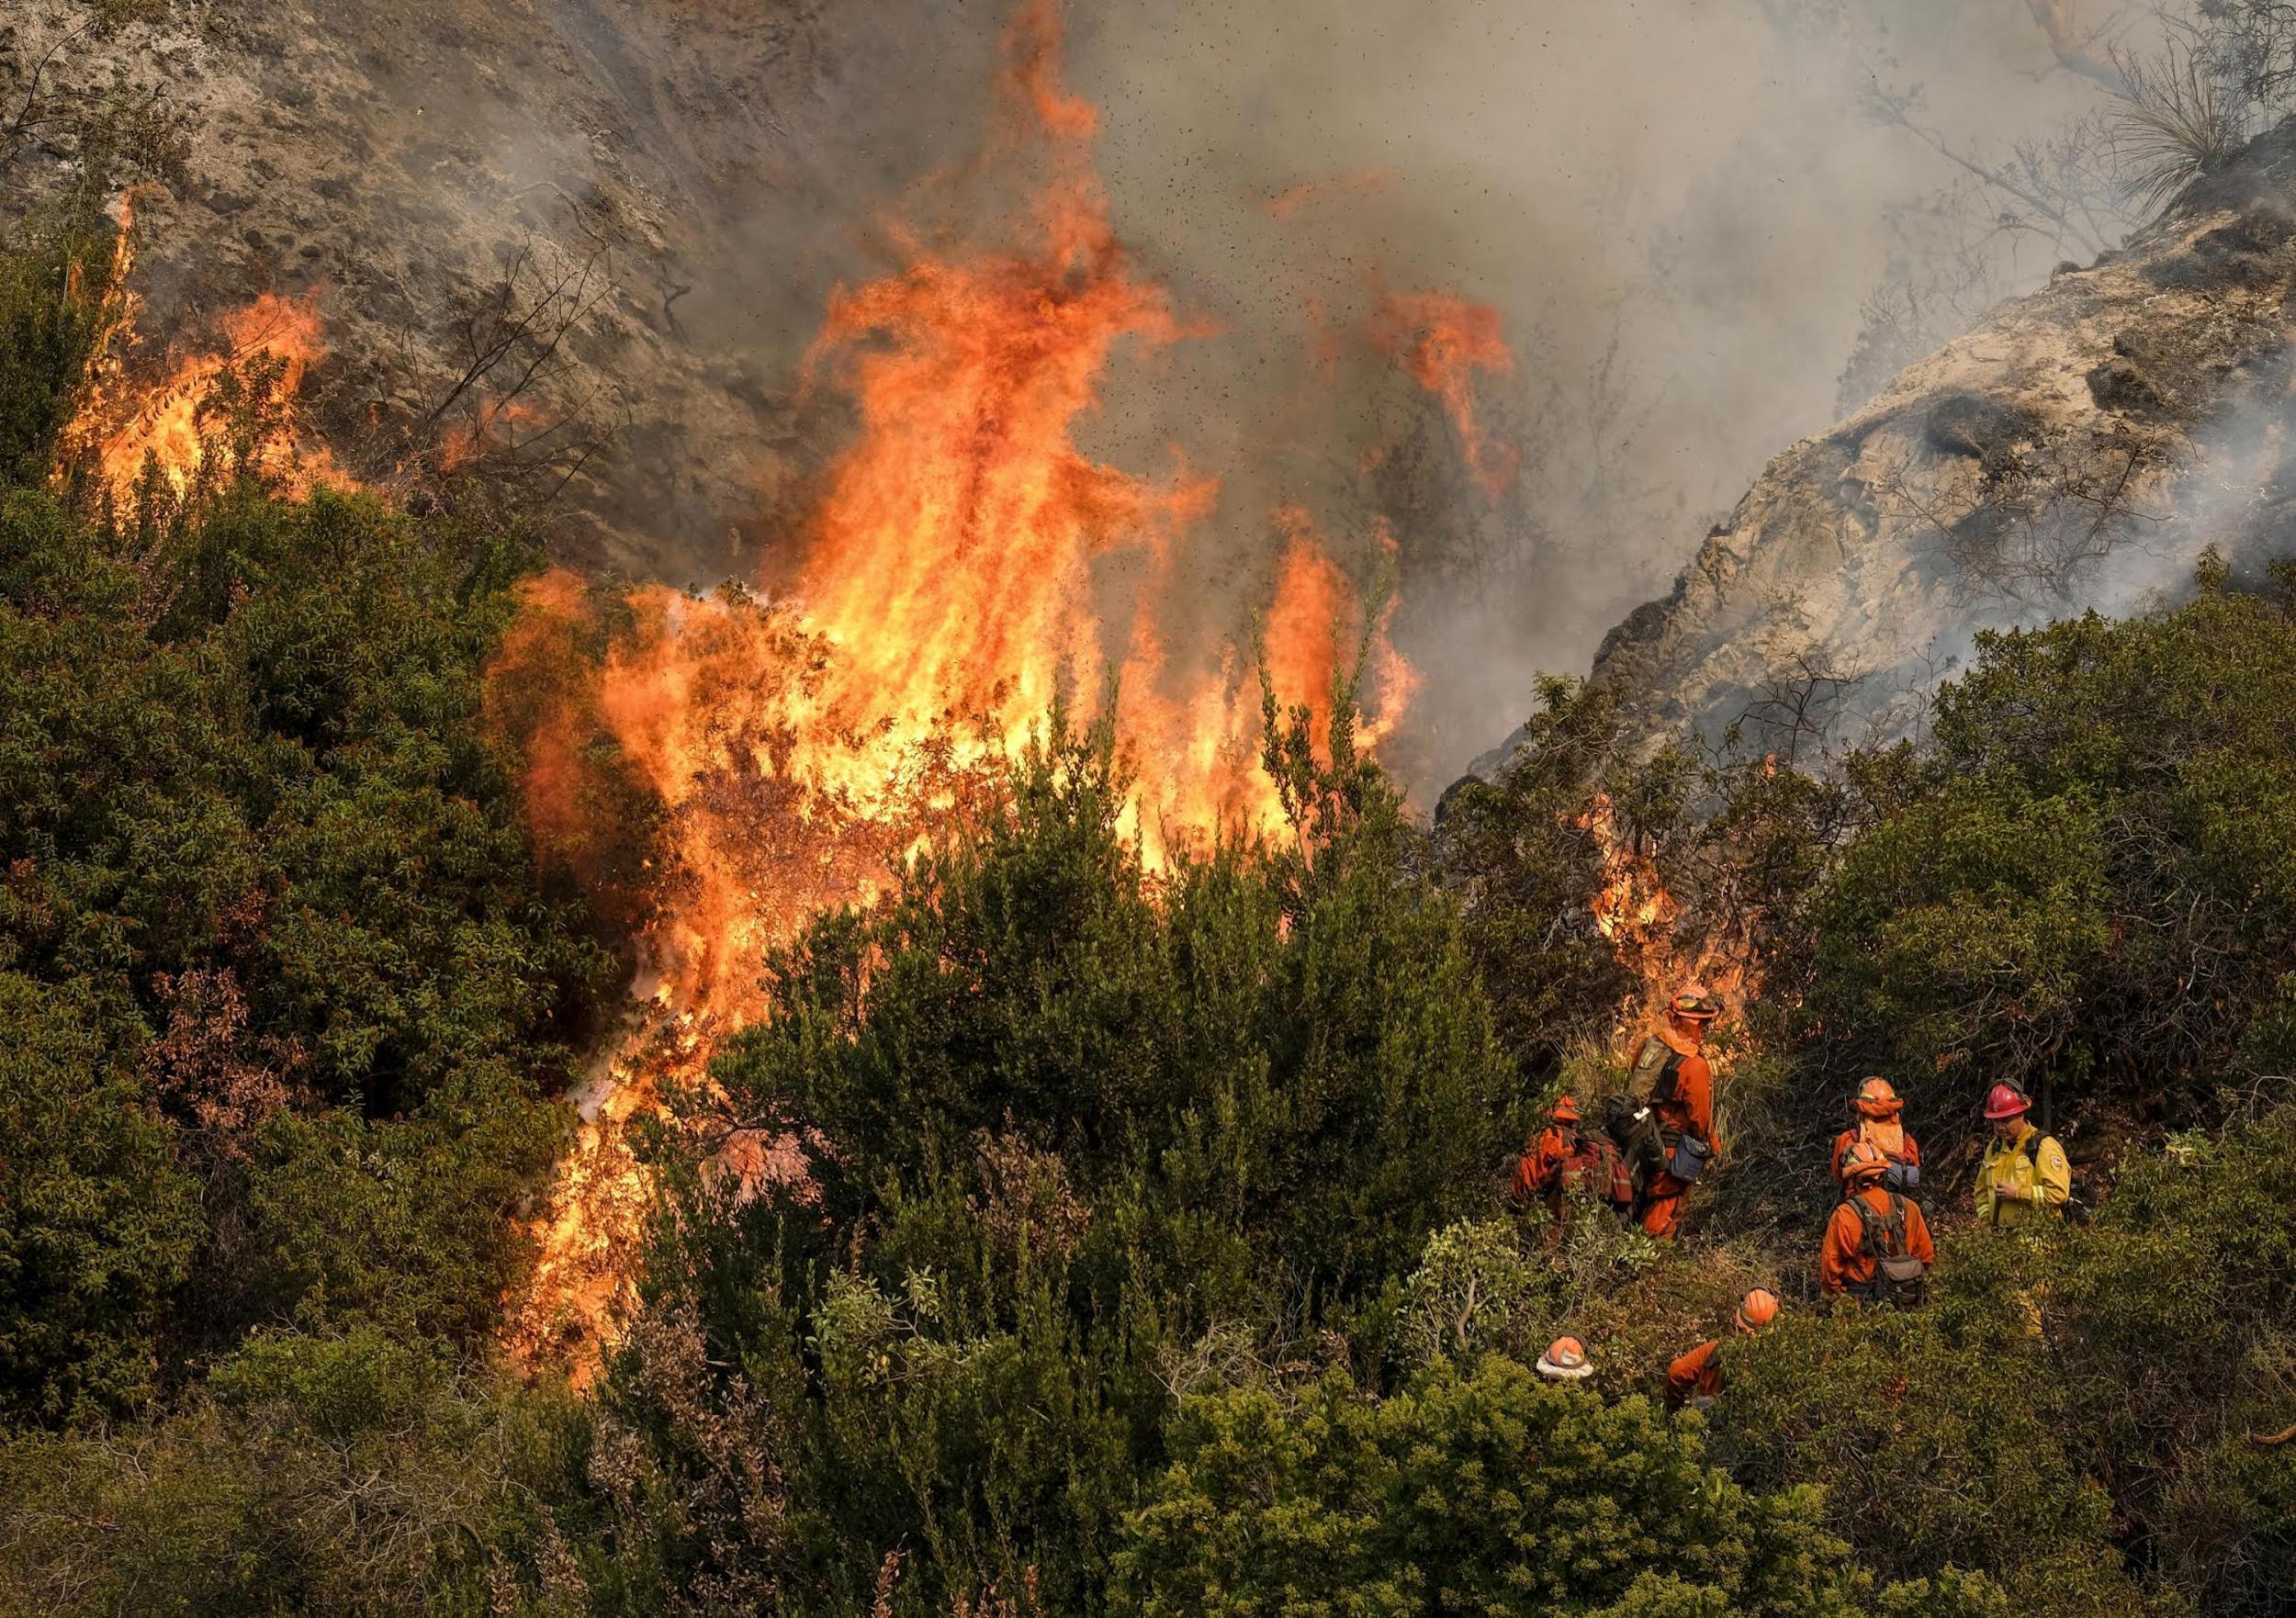 Firefighters battle a brushfire on the hillside in Burbank, Los Angeles County